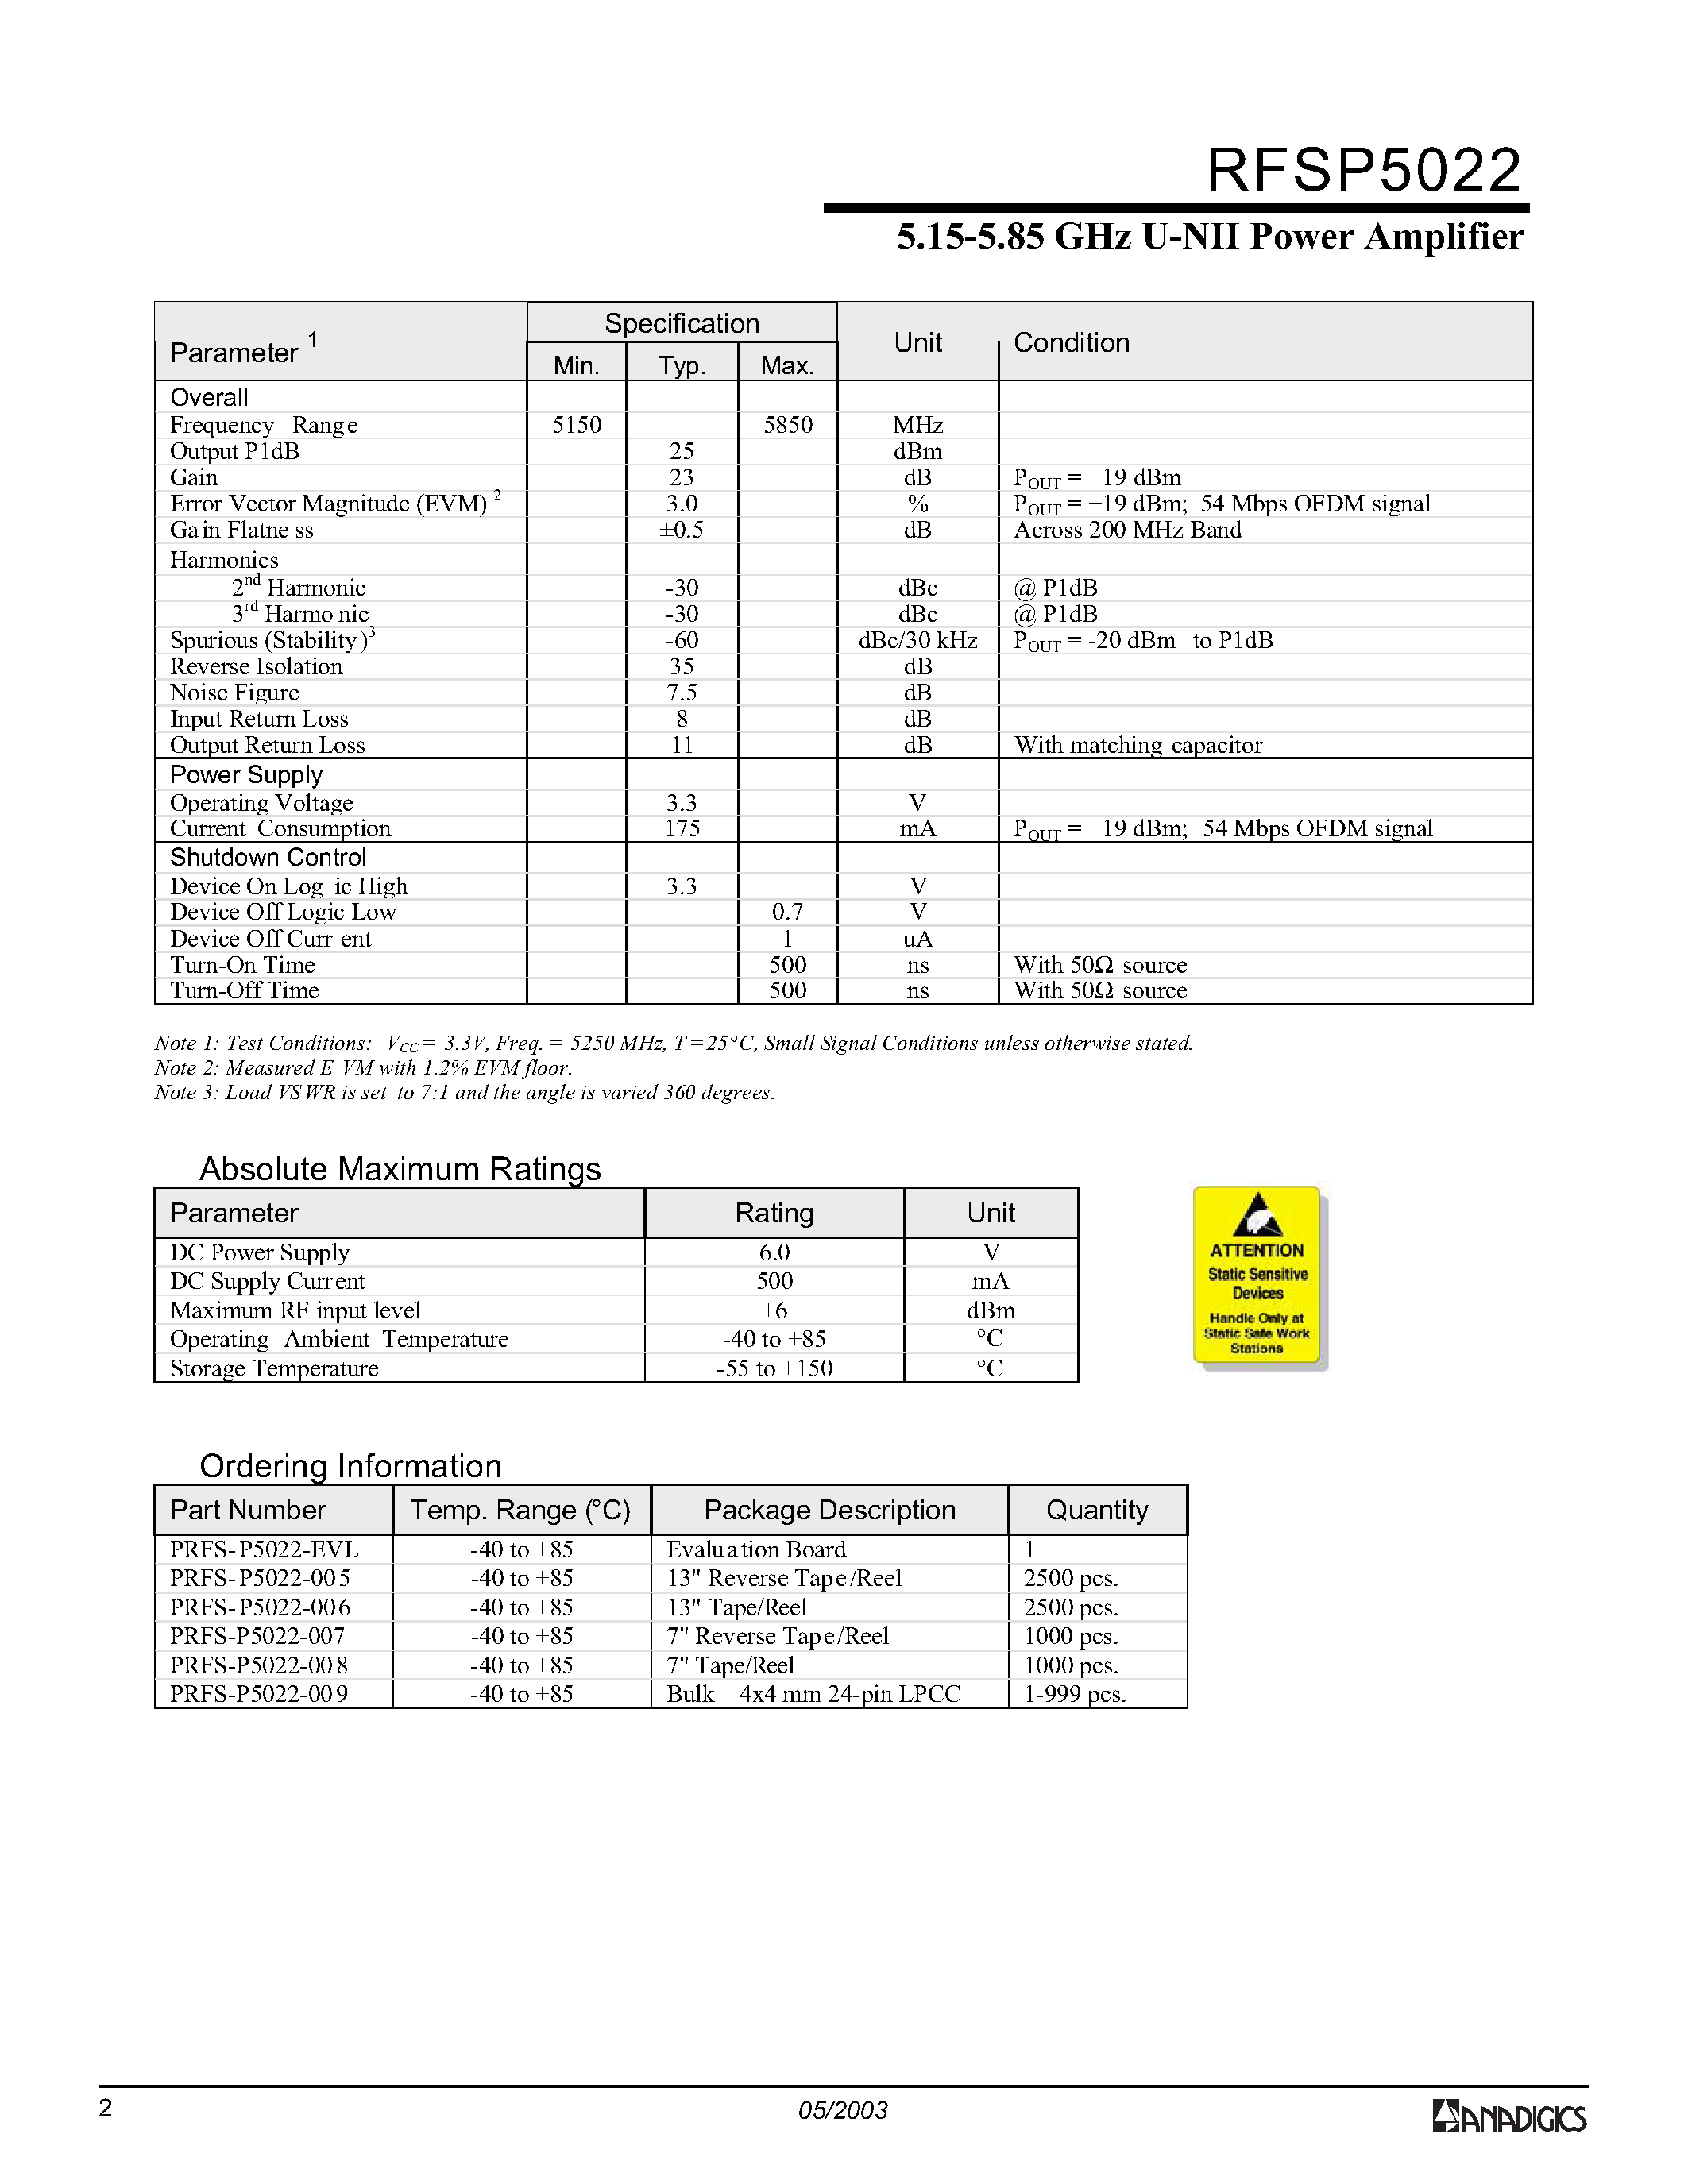 Даташит PRFS-P5022-007 - 5.15-5.85 GHz U-NII Power Amplifier страница 2